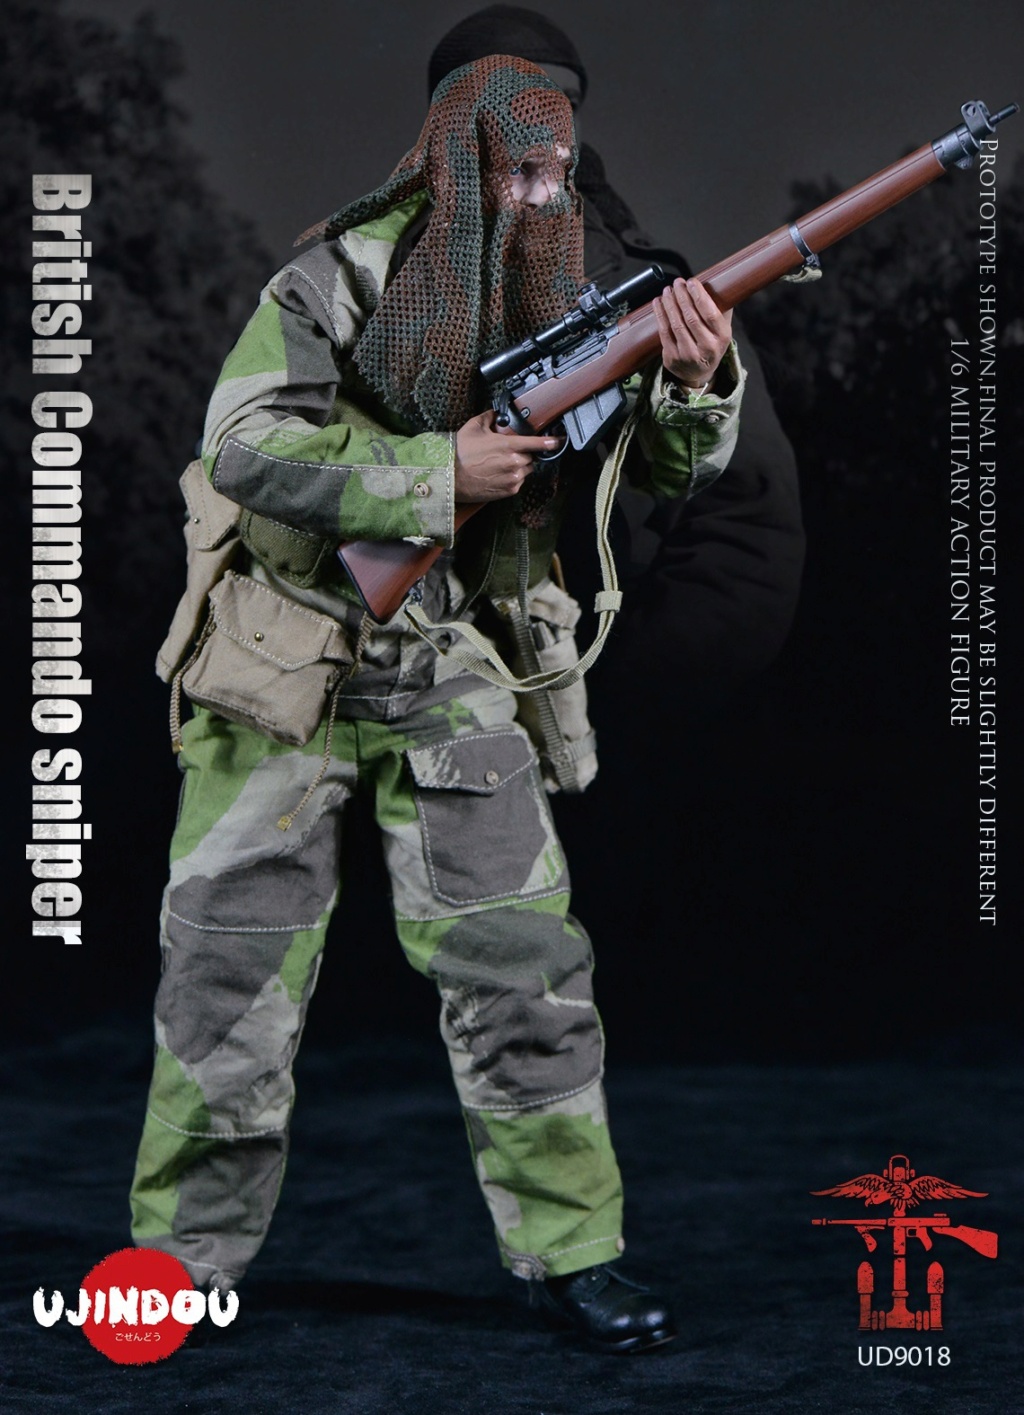 Historical - NEW PRODUCT: UJINDOU: UD9018 1/6 Scale WWII British Commando Sniper 1944 13490410